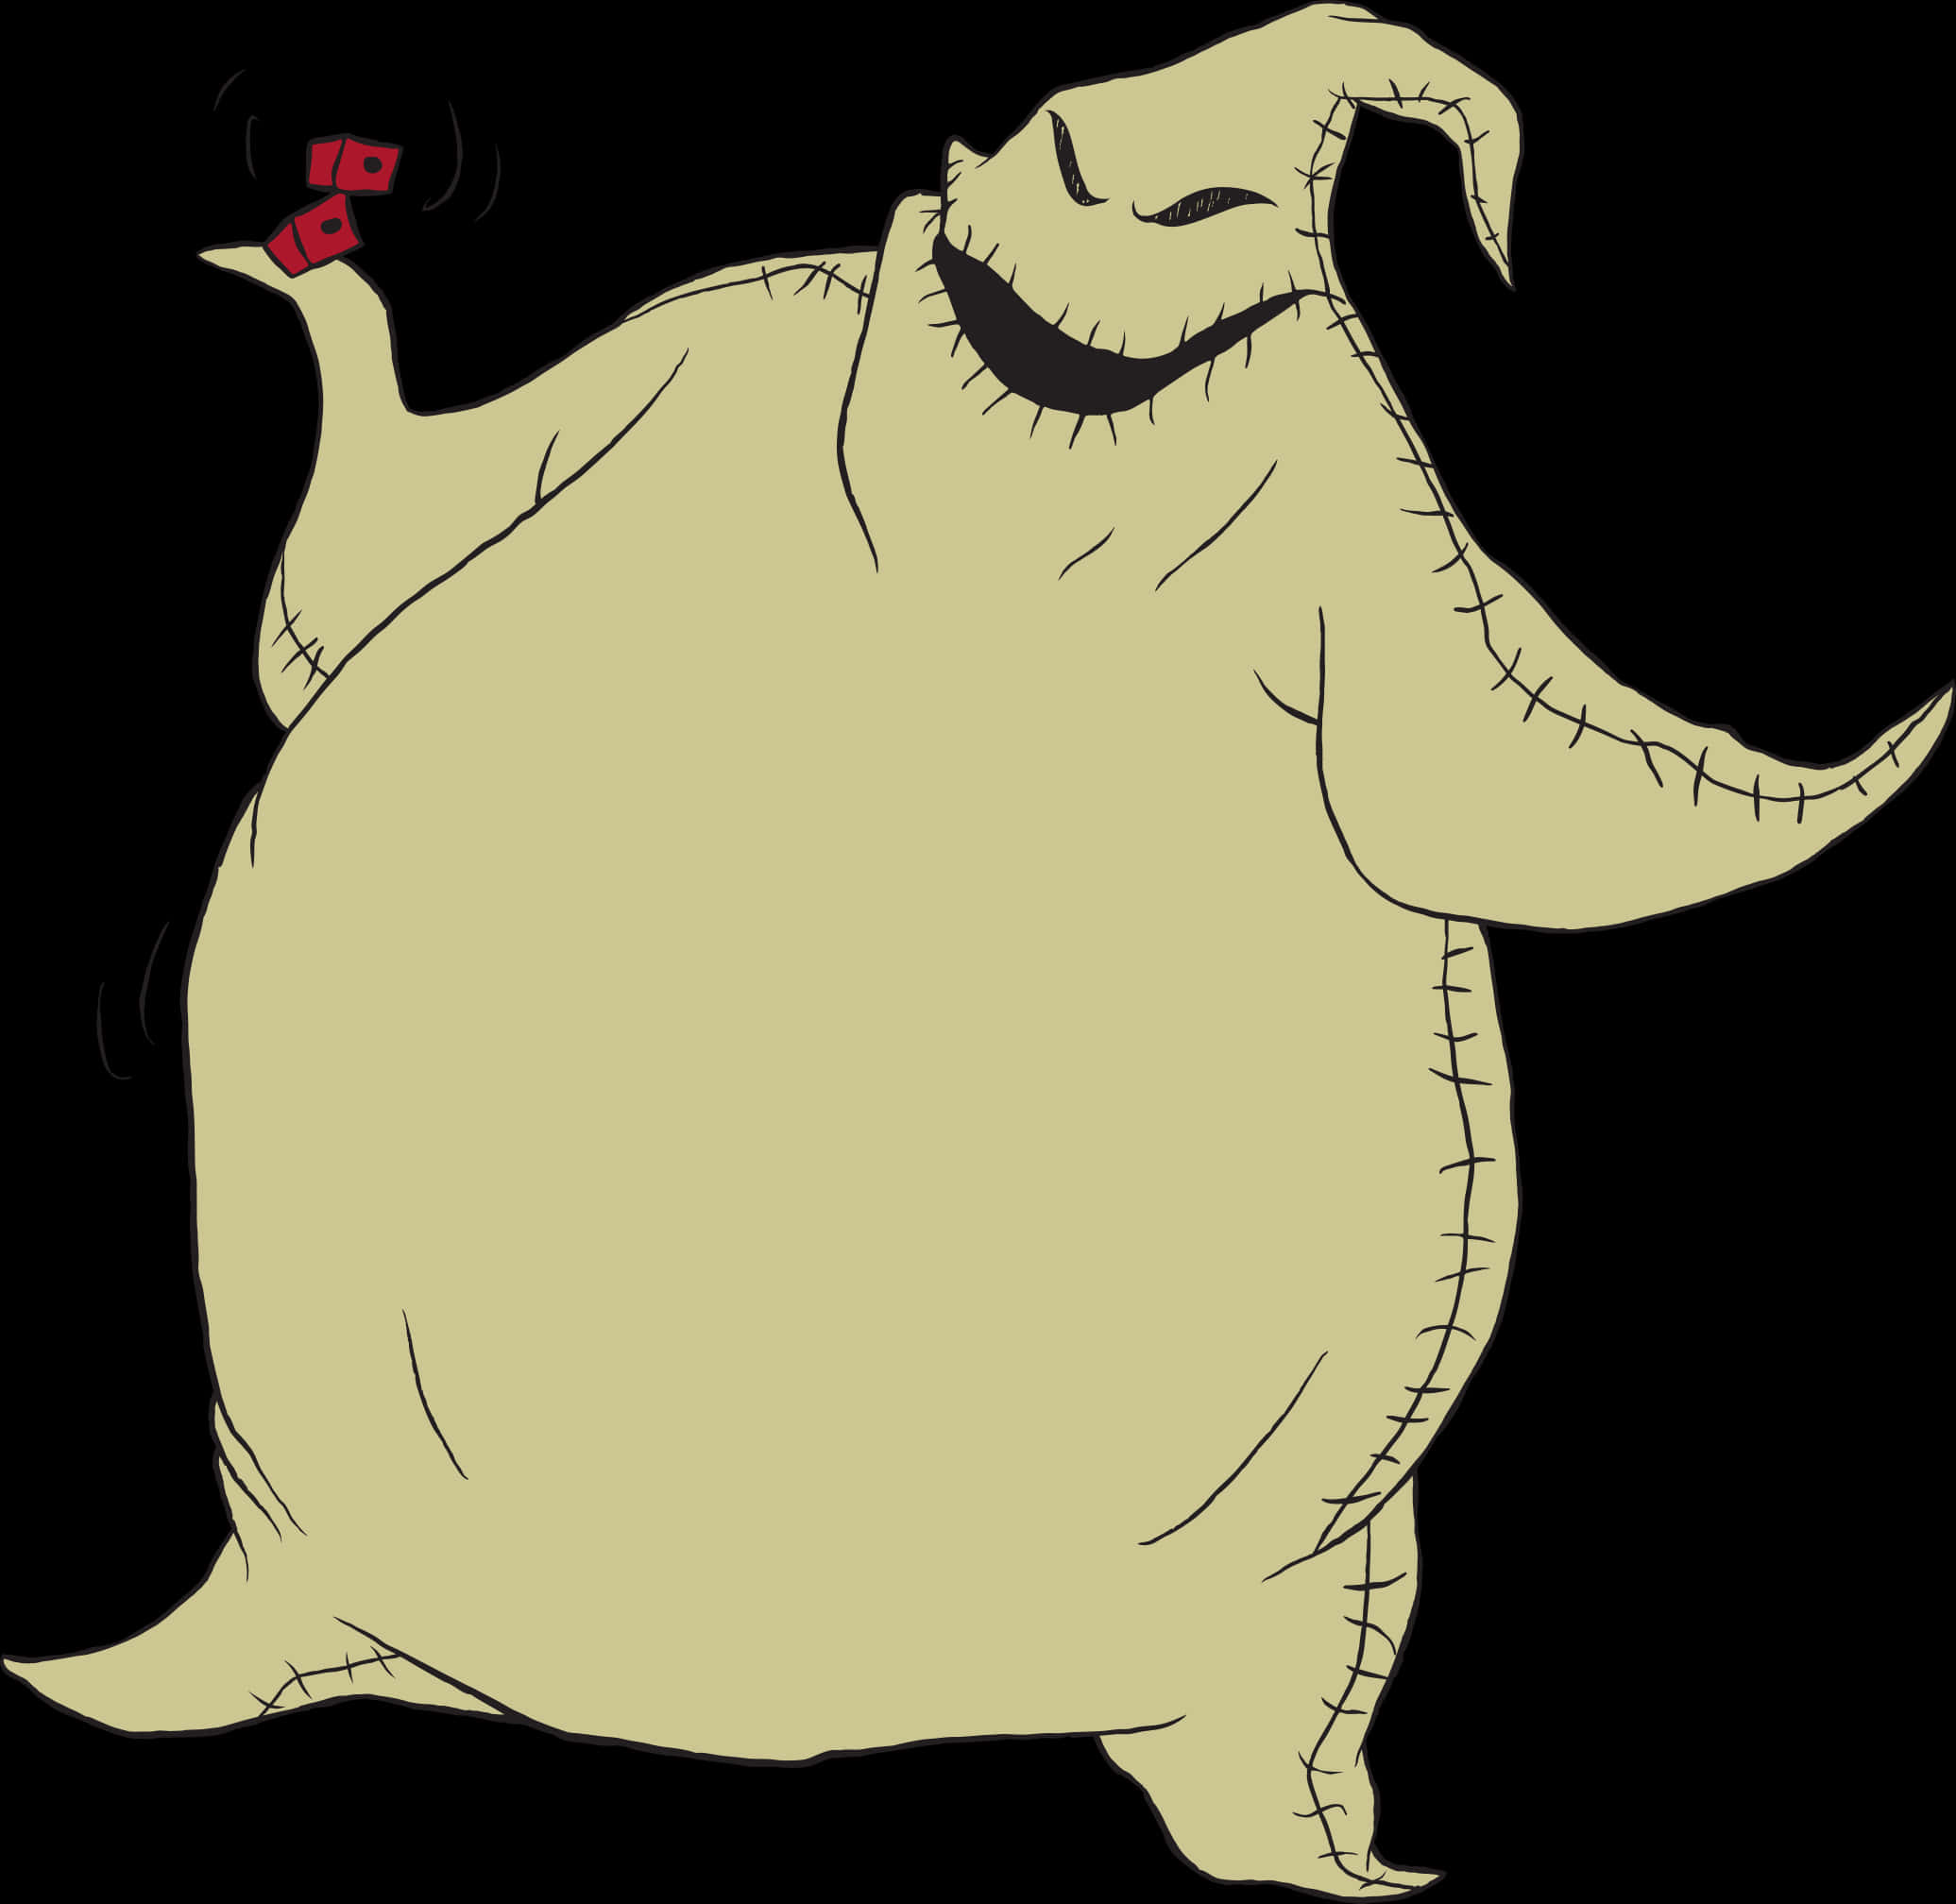 A Cartoon Of A Fat White Monster